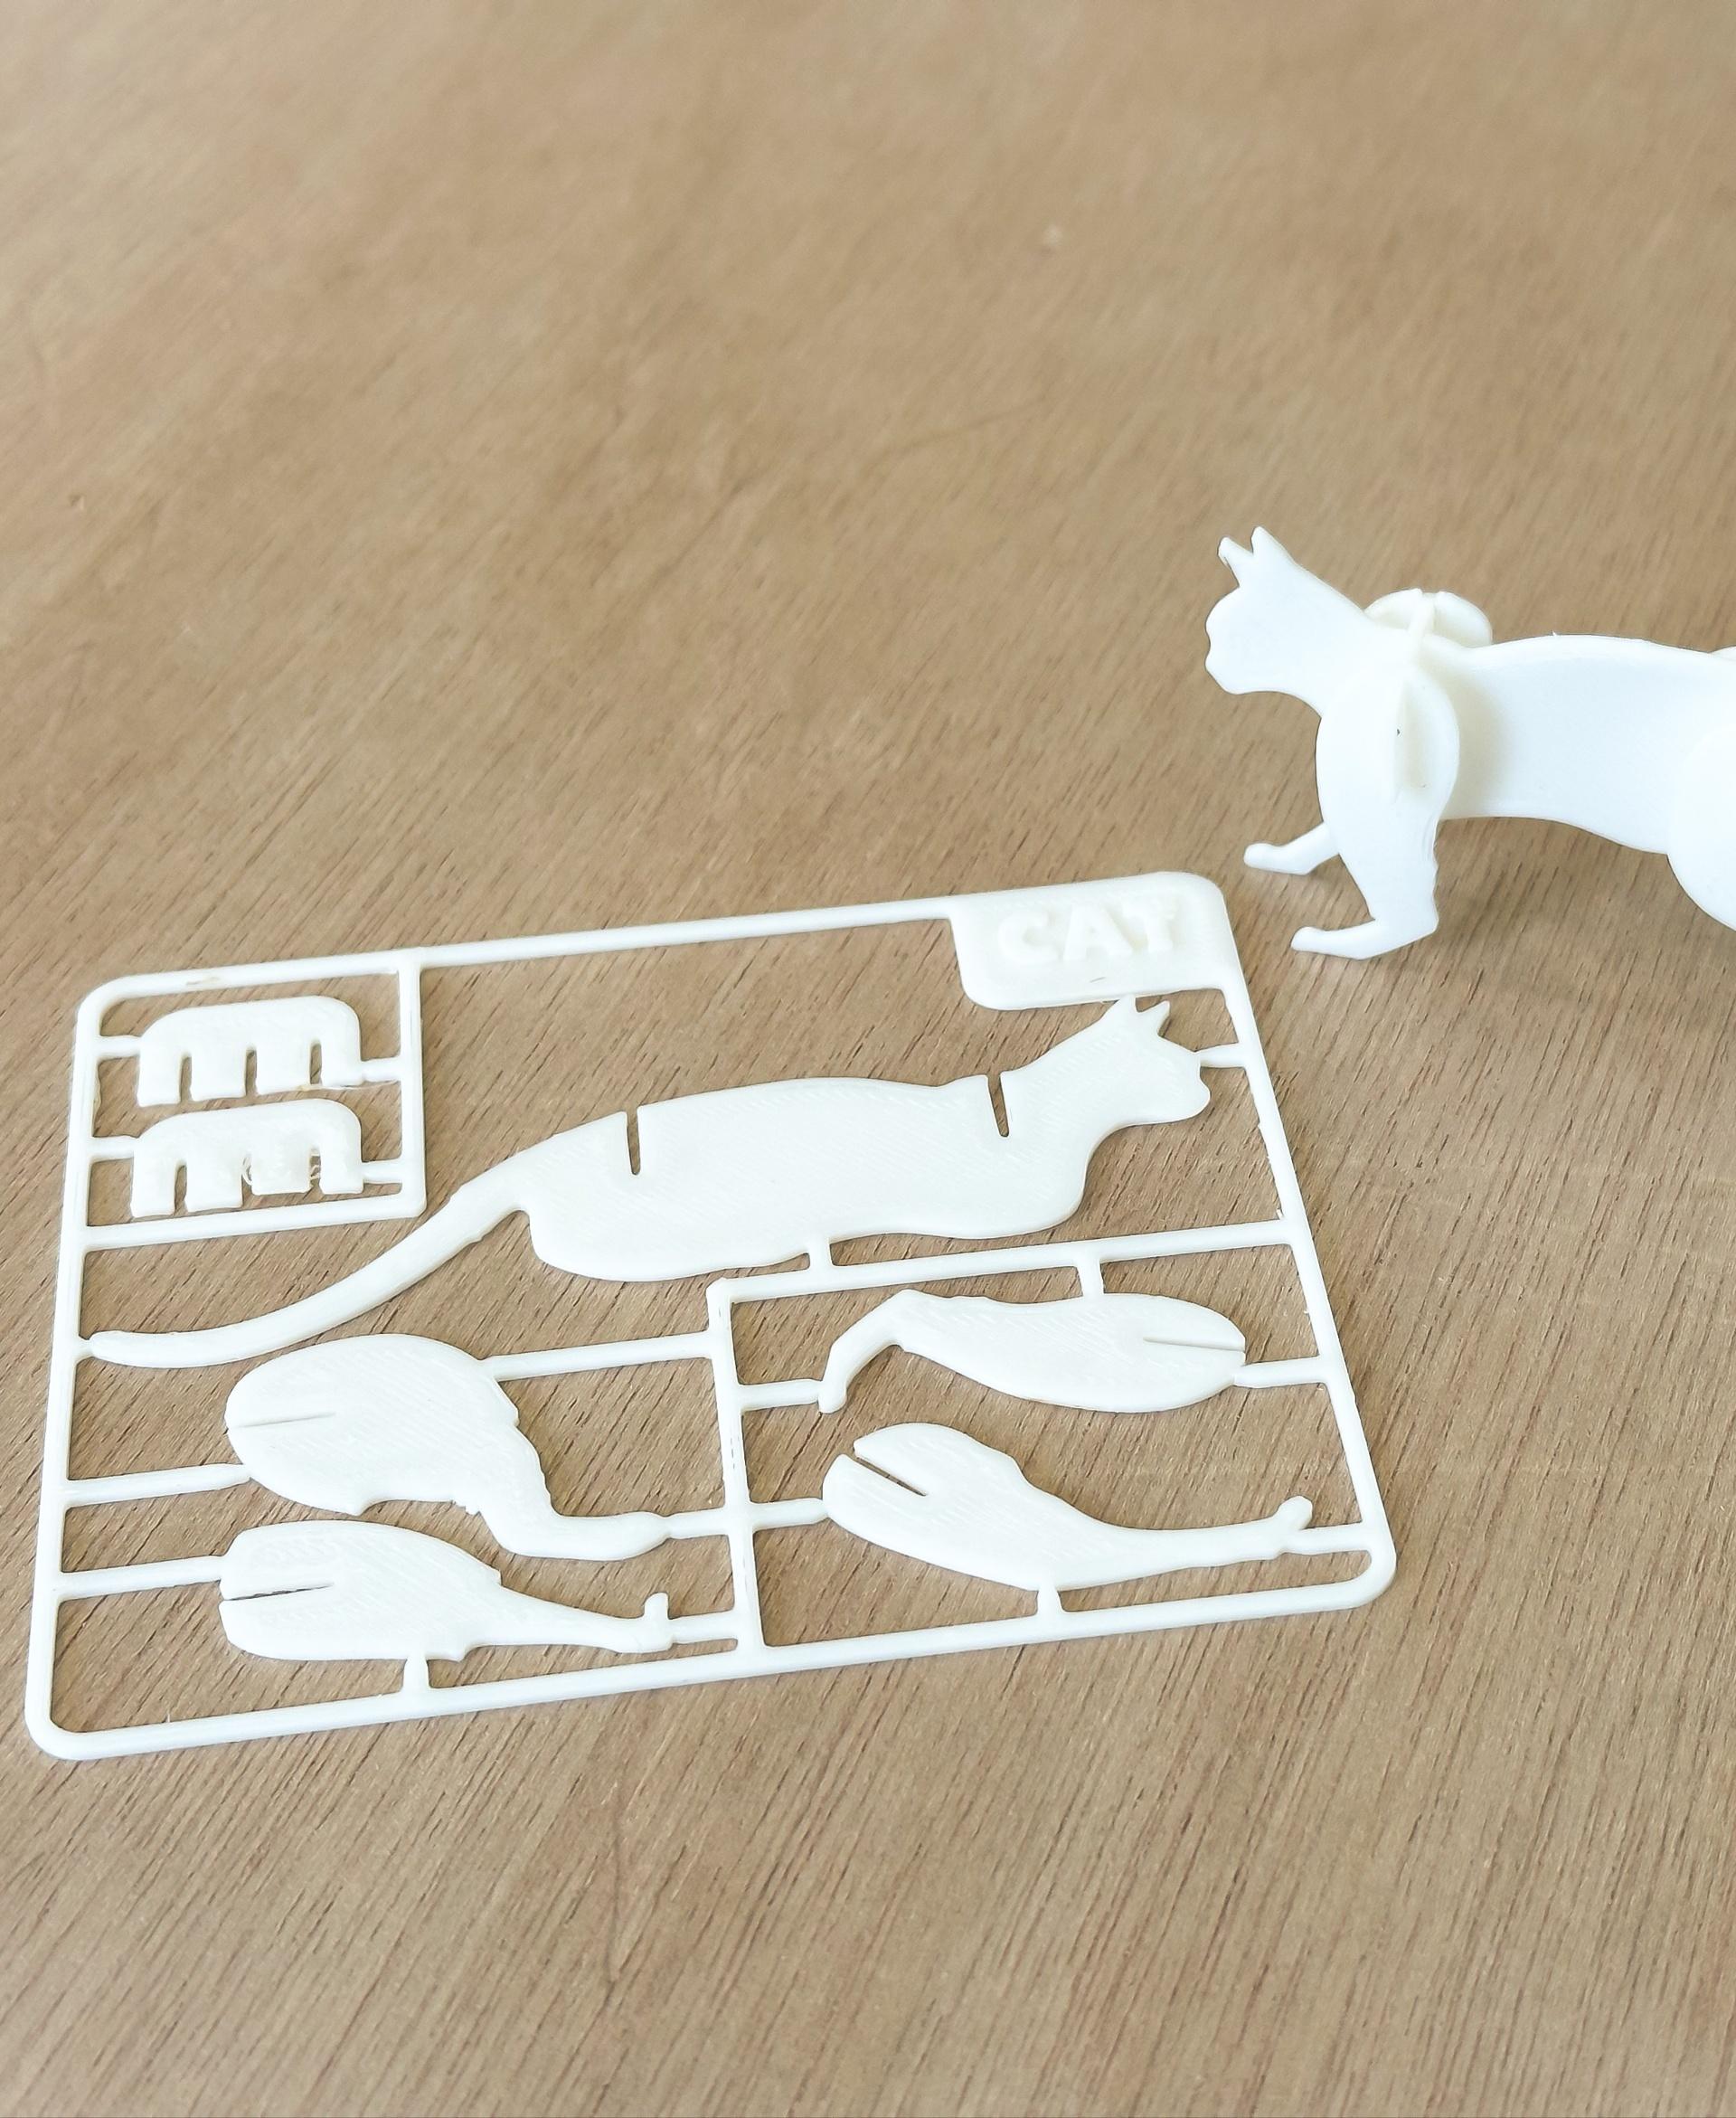 Cat Kit Card 01 (Print In Place) 3d model